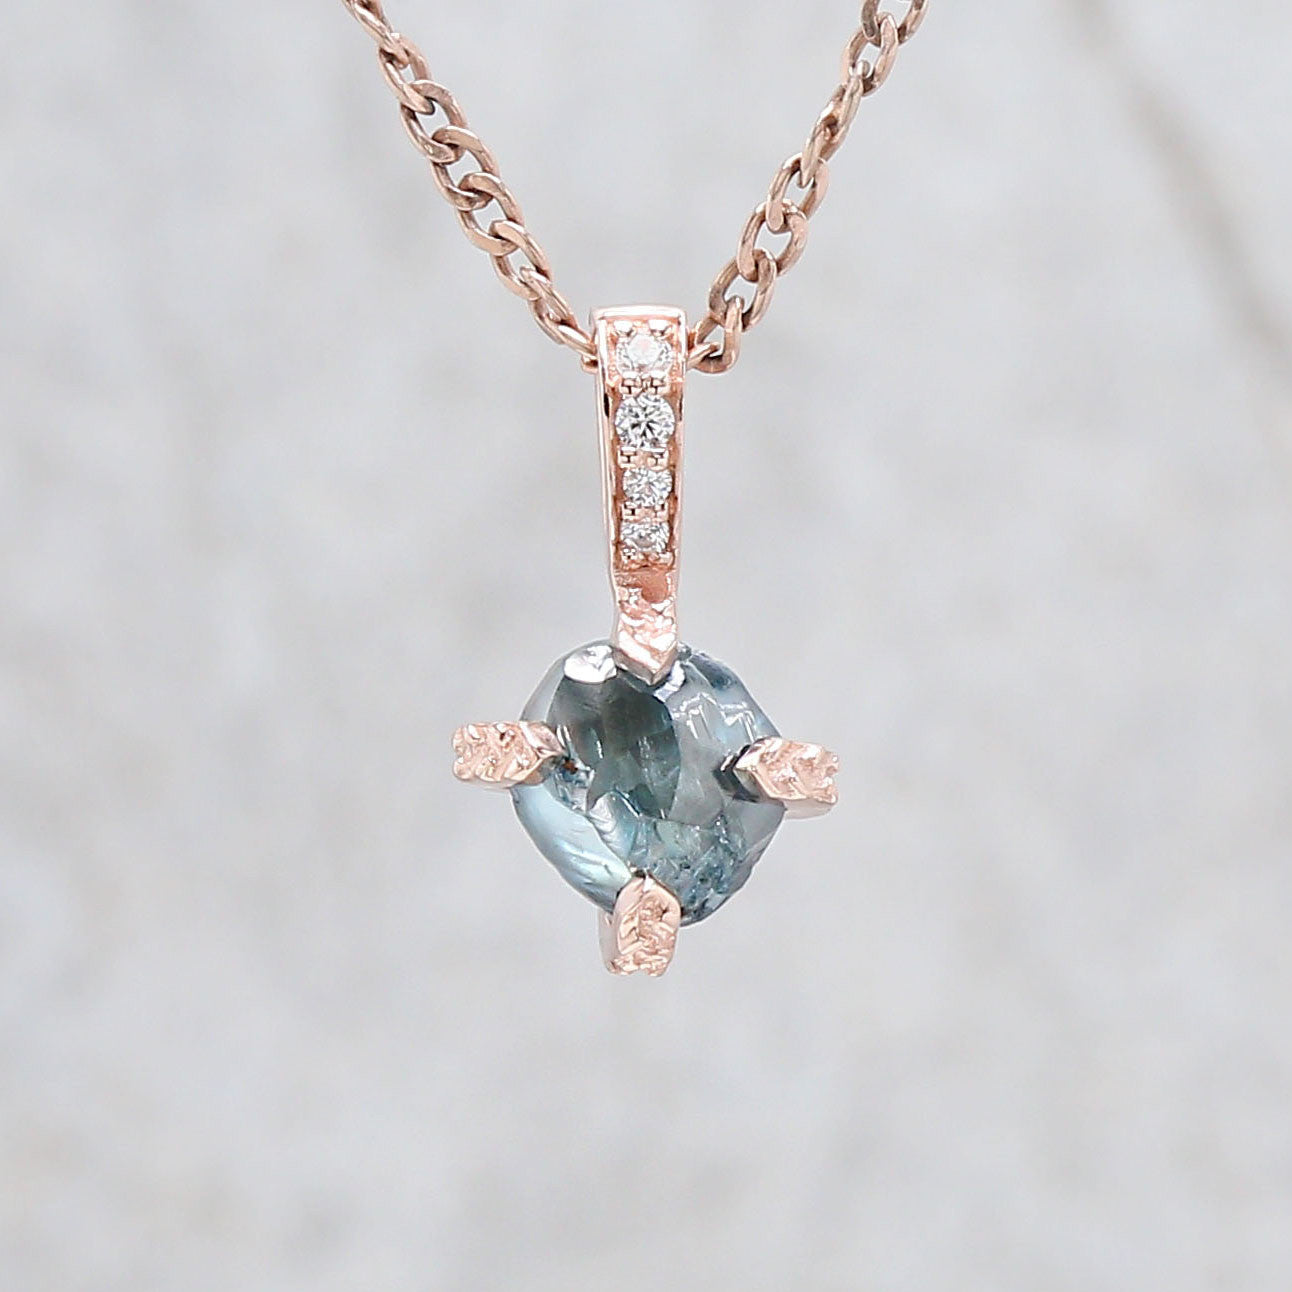 Rough Blue Color Diamond Pendant 1.36 Ct 6.31 MM Uncut Diamond Pendant 14K Solid Rose Gold Silver Engagement Pendant Gift For Her QL2343